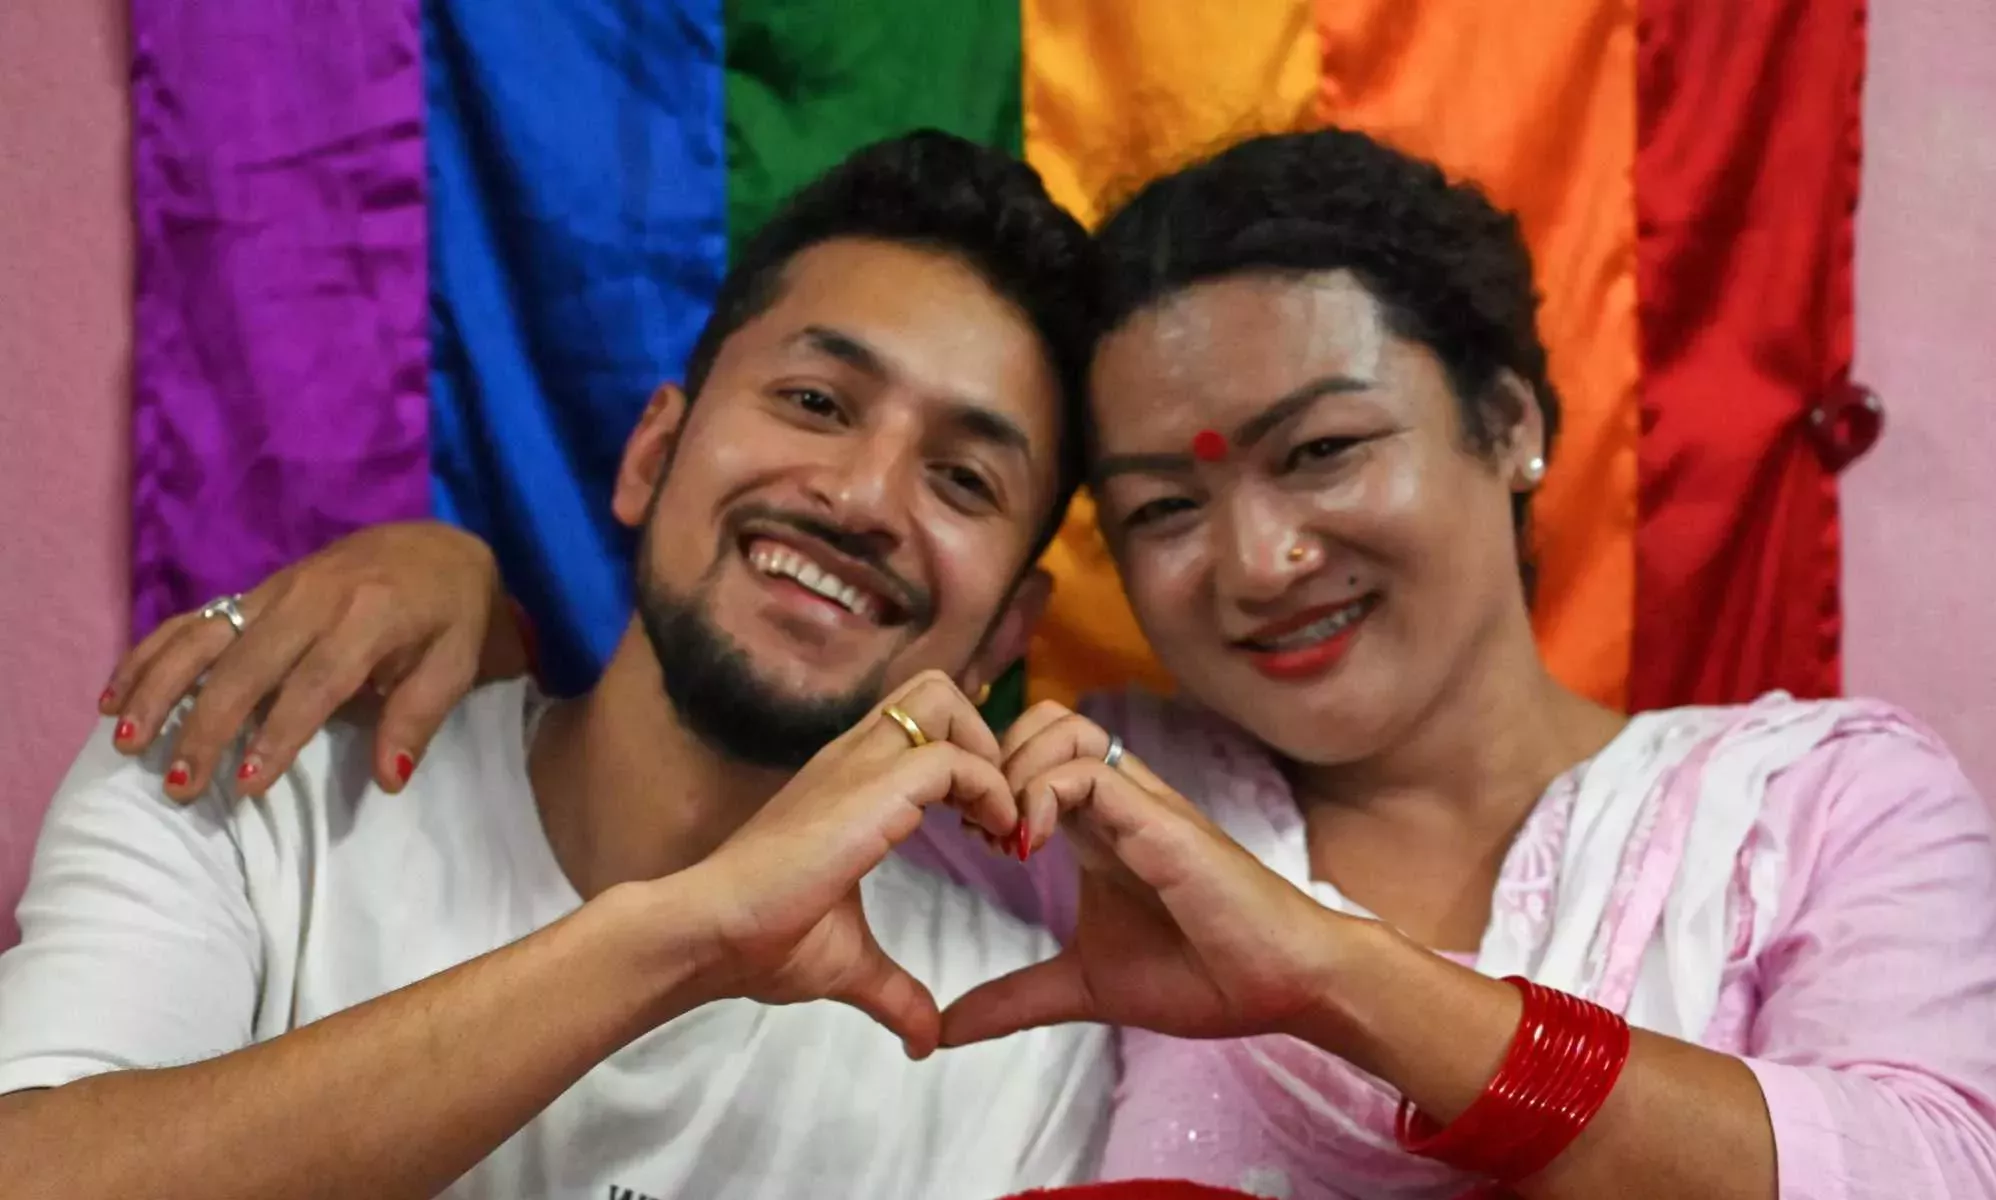 Nepal registra por fin el primer matrimonio homosexual para una pareja LGBTQ